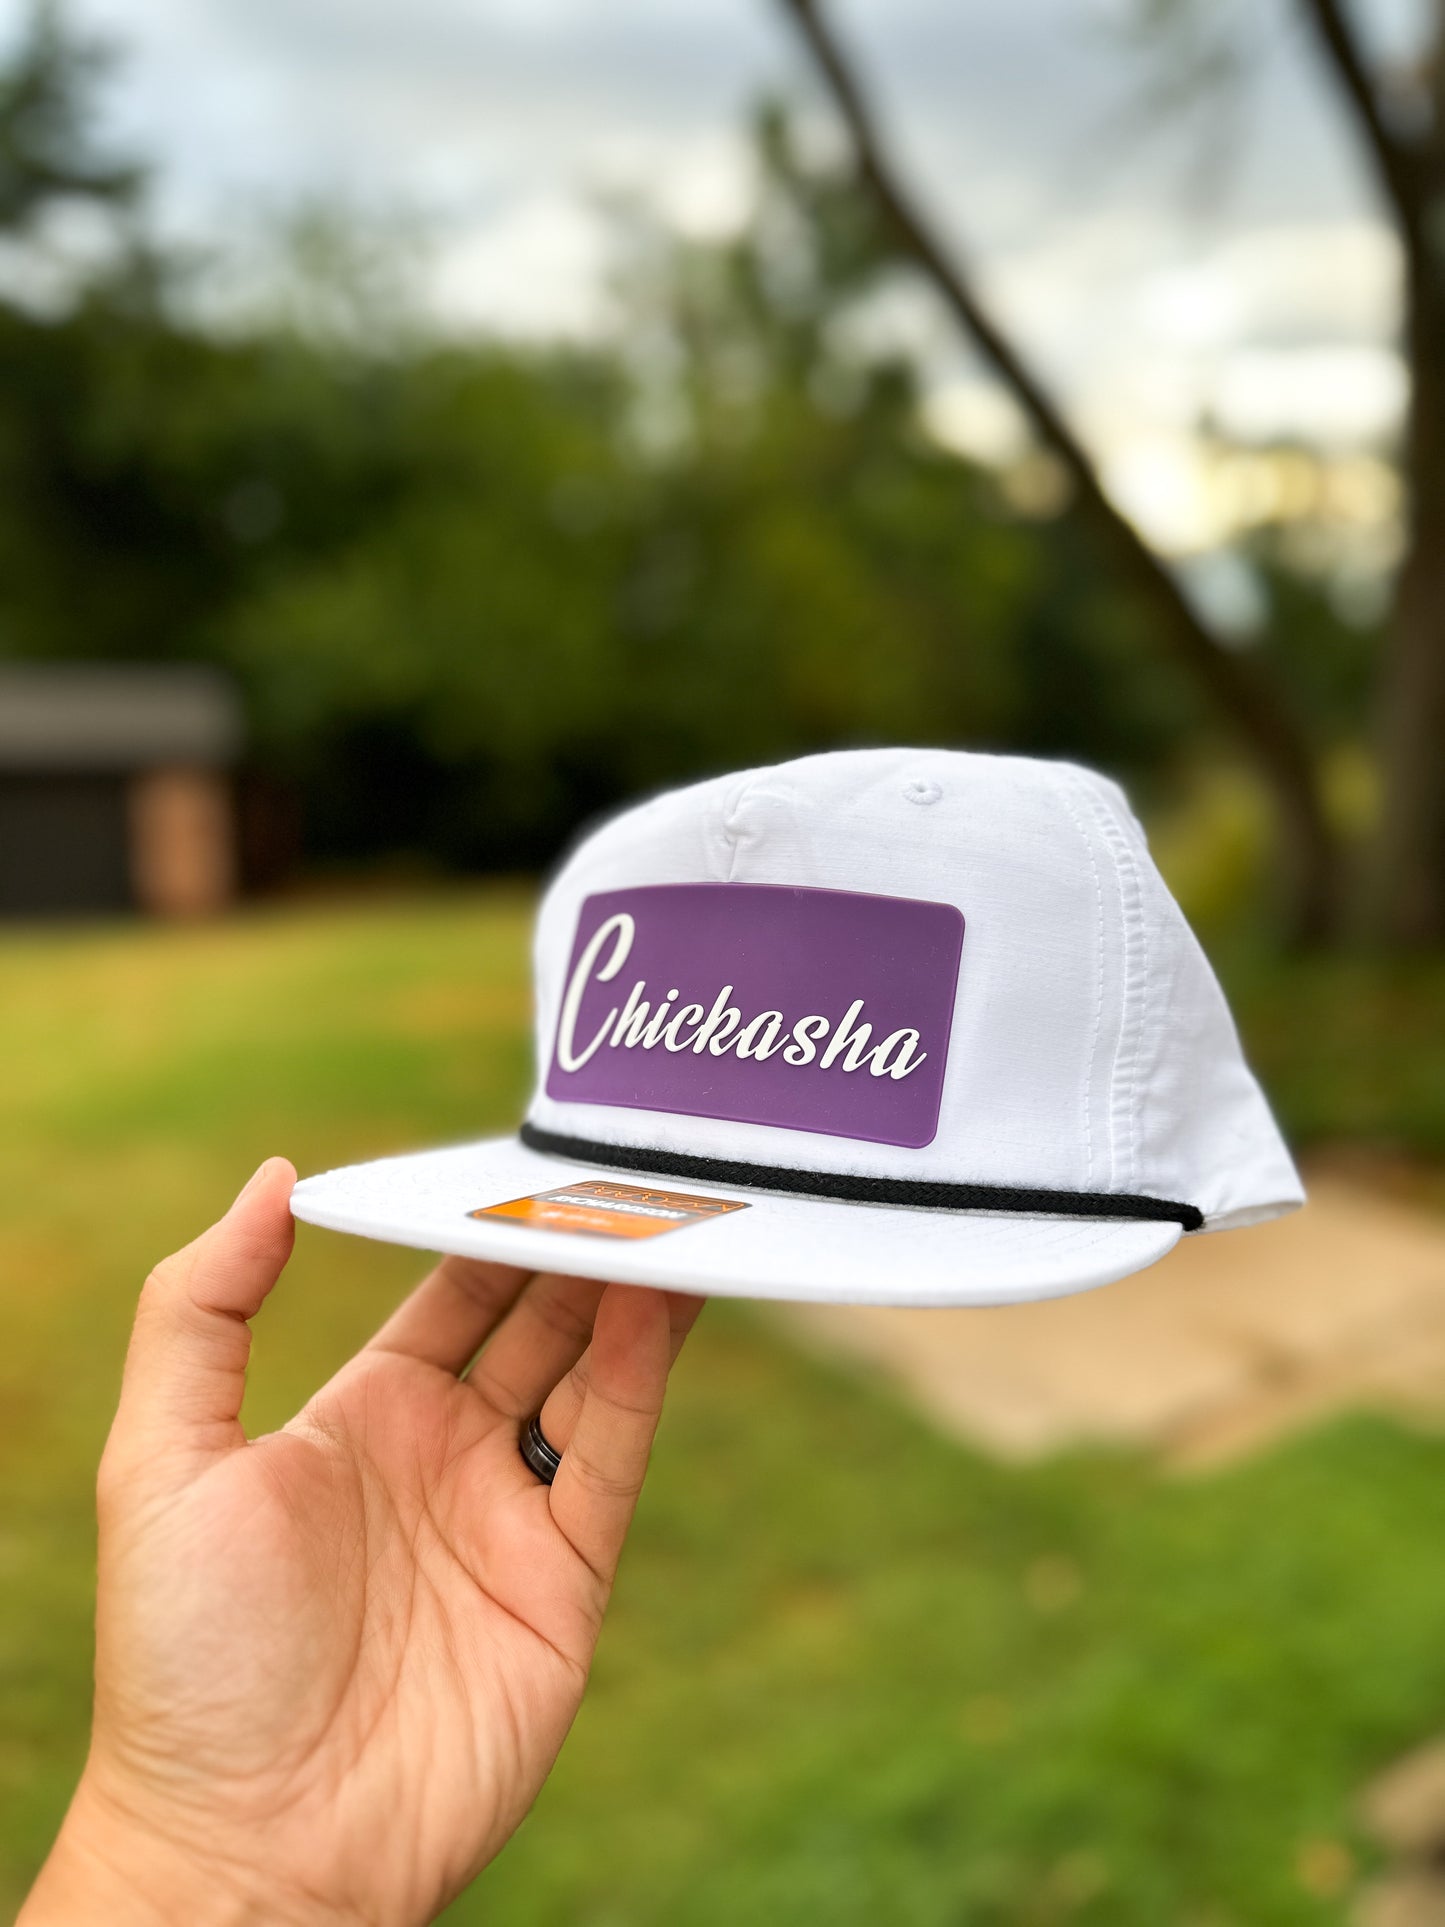 Chickasha Purple Patch Hat